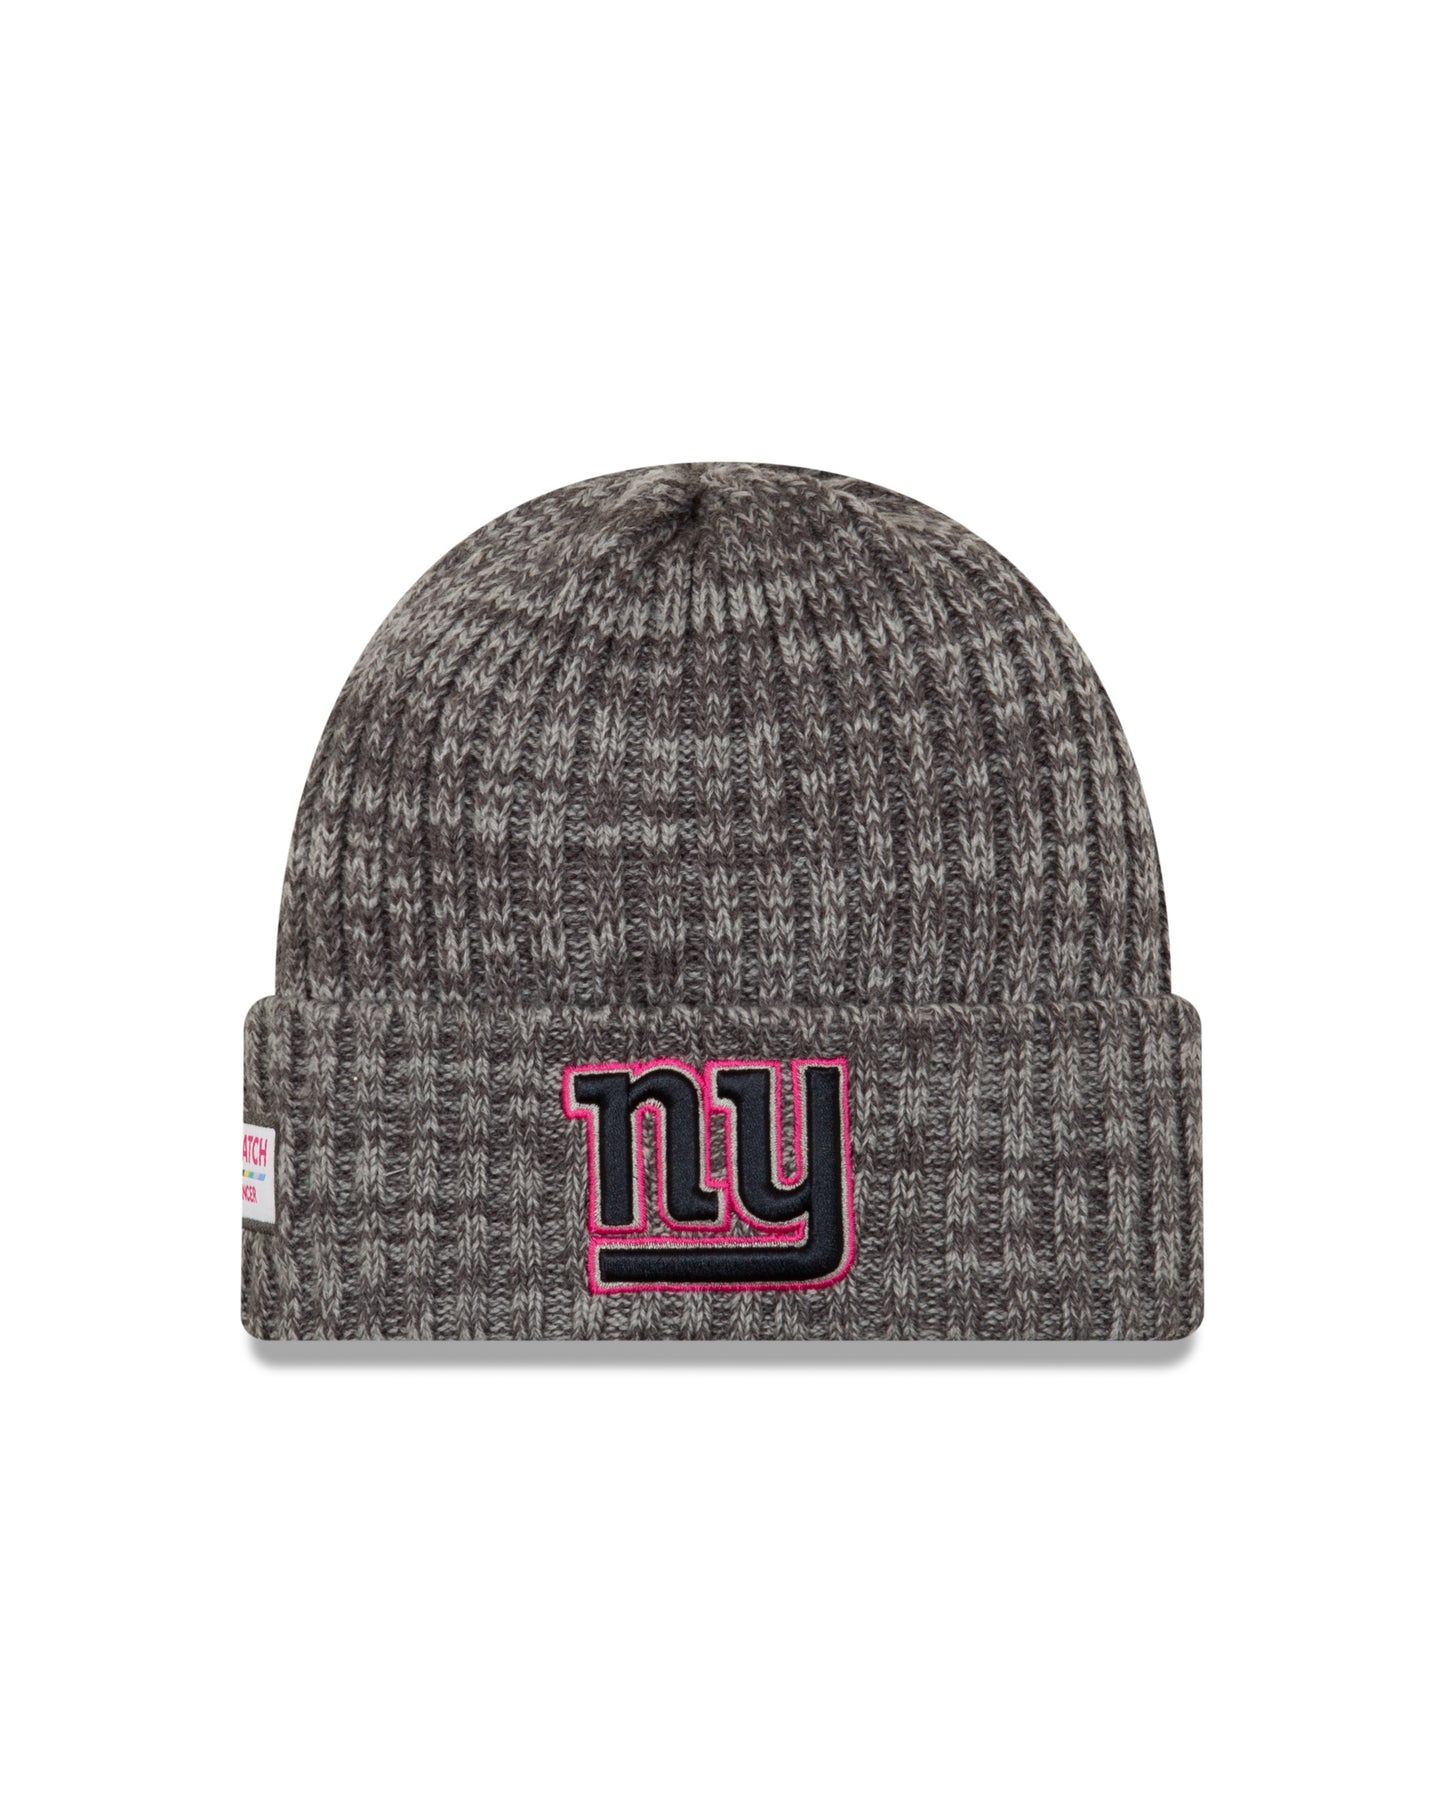 New York Giants New Era NFL Crucial Catch Cuffed Knit Hat - Gray